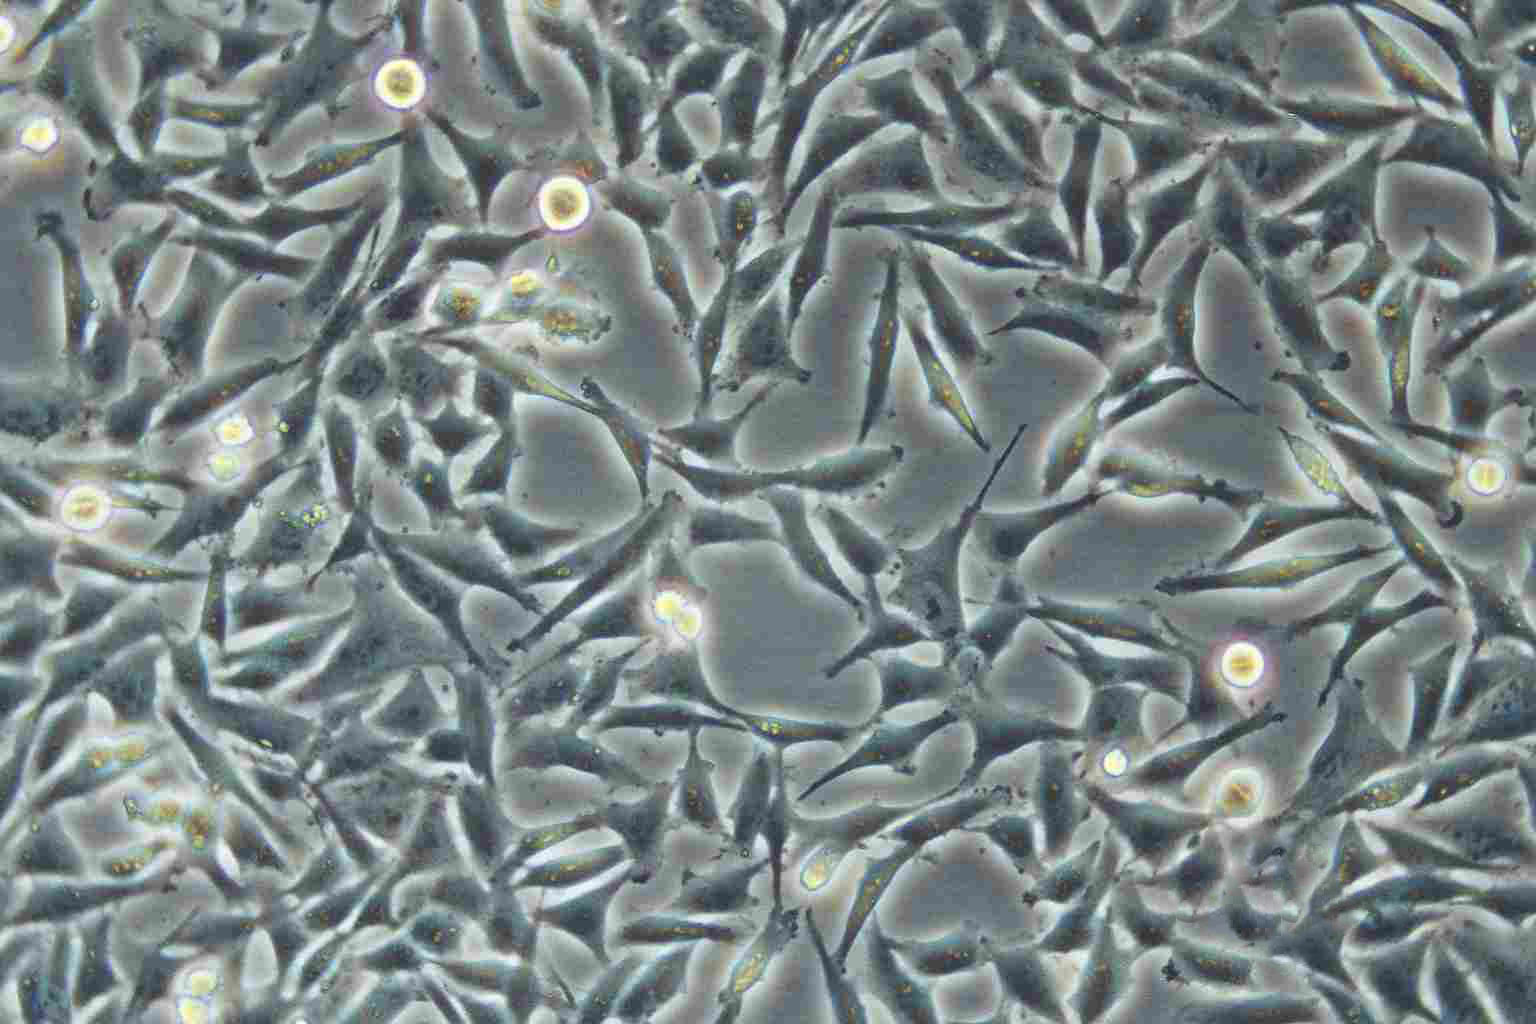 Lu-165 epithelioid cells人肺腺癌细胞系,Lu-165 epithelioid cells